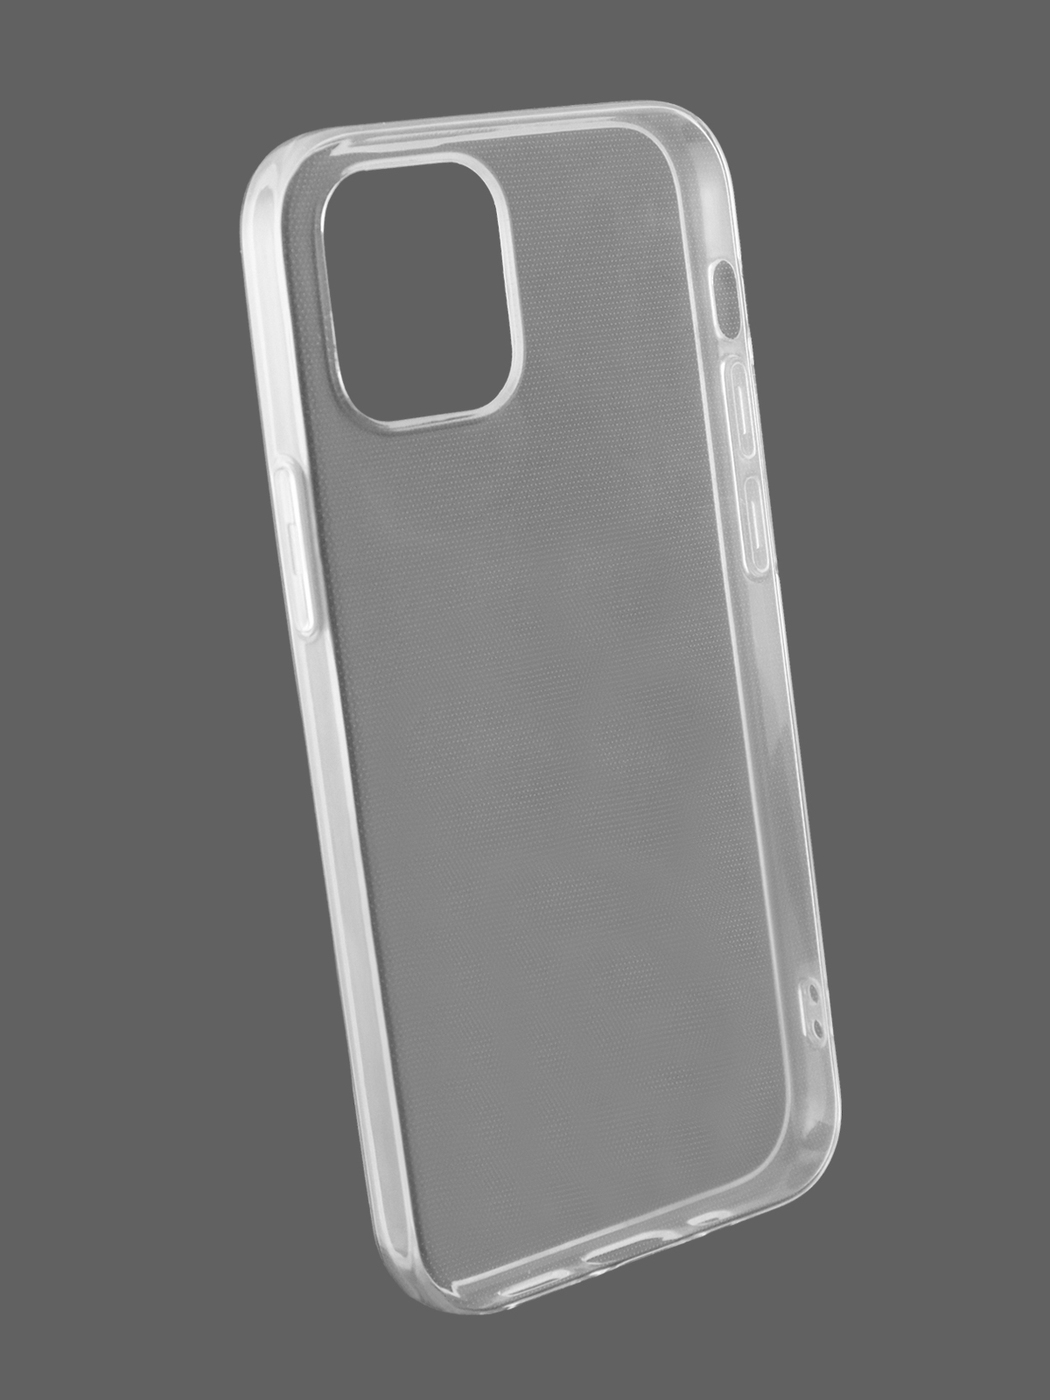 Чехол LuxCase для APPLE iPhone 12 Mini TPU+PC 2mm Transparent 63104 чехол brosco для apple iphone 12 12 pro tpu transparent ip12 12pro tpu transparent